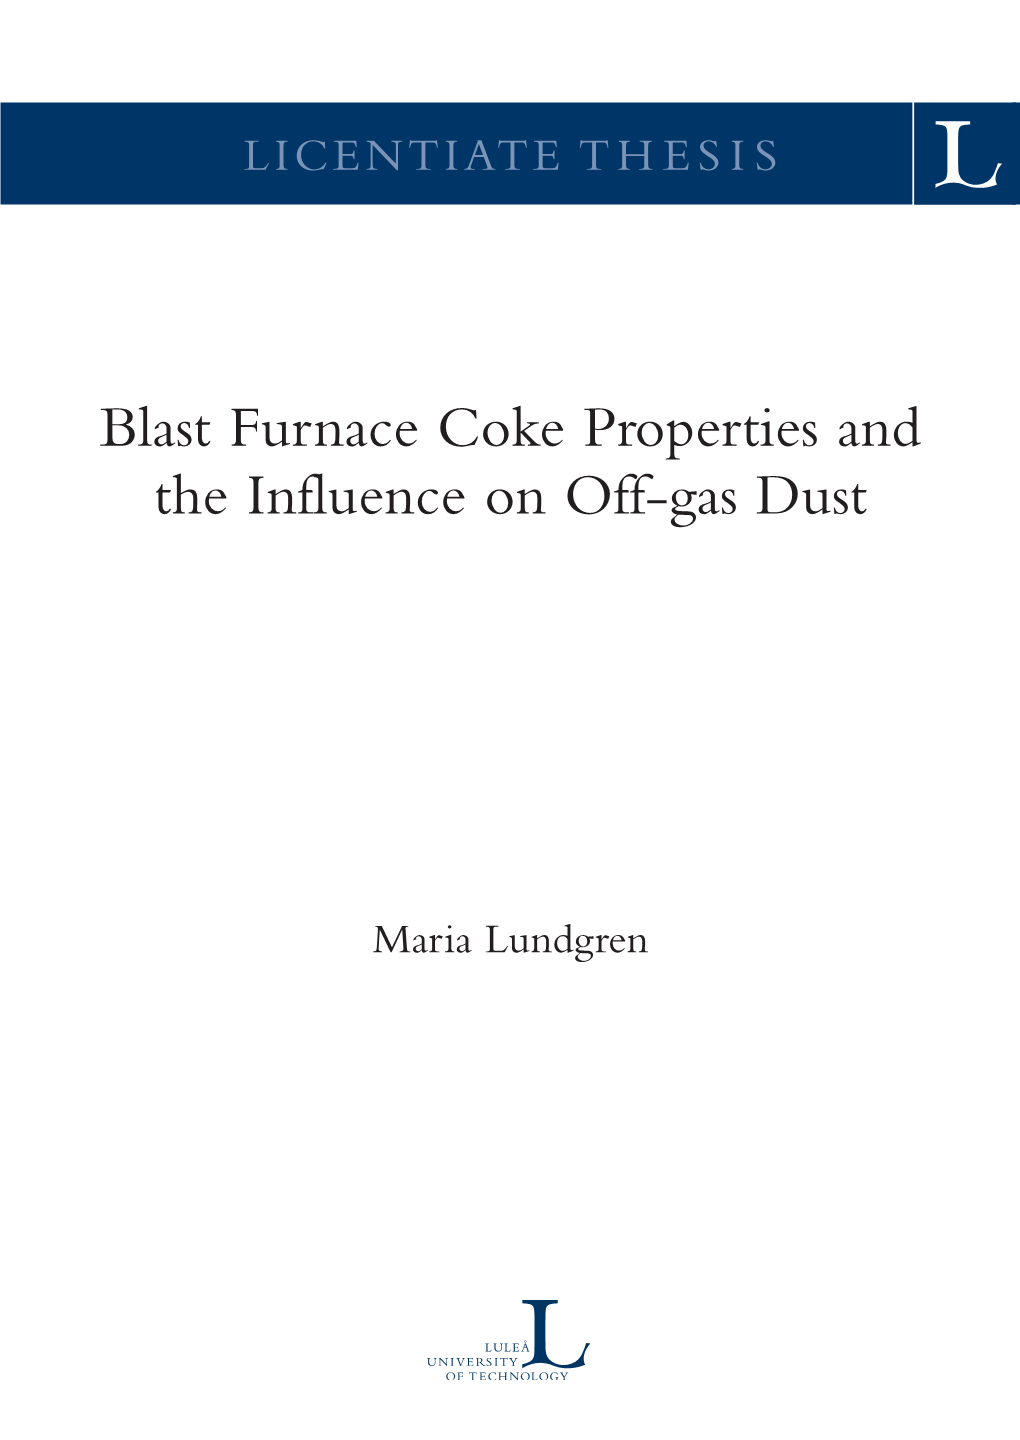 Blast Furnace Coke Properties and the Influence on Off-Gas Dust Off-Gas on Influence the and Cokeproperties Furnace Blast Lundgren Maria